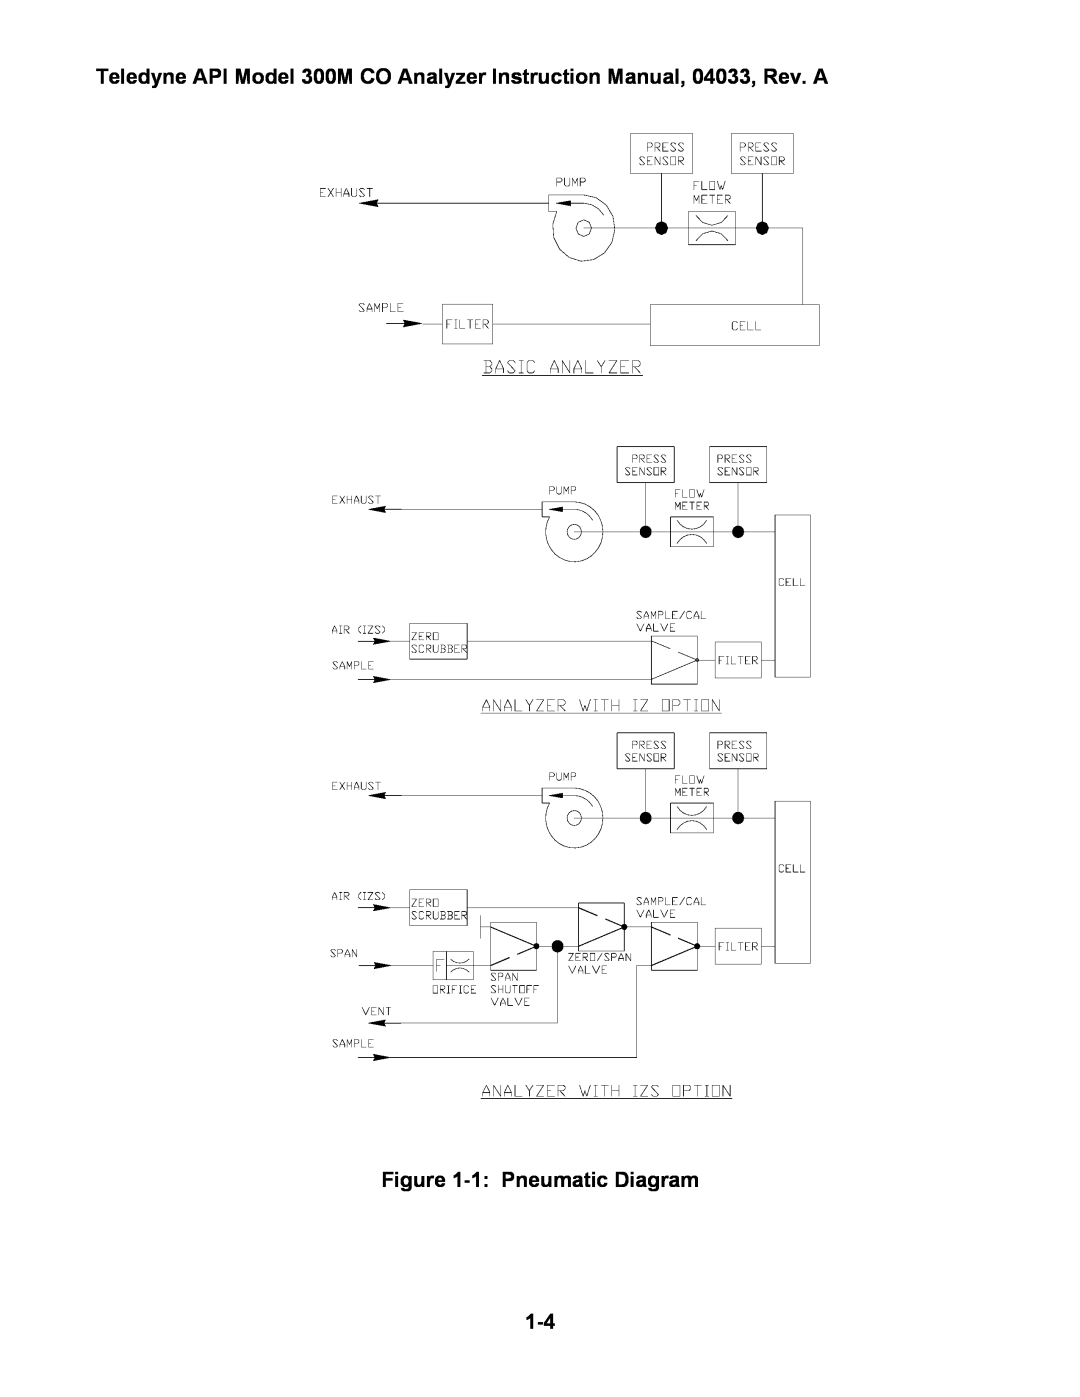 Teledyne 300M instruction manual 1 Pneumatic Diagram 